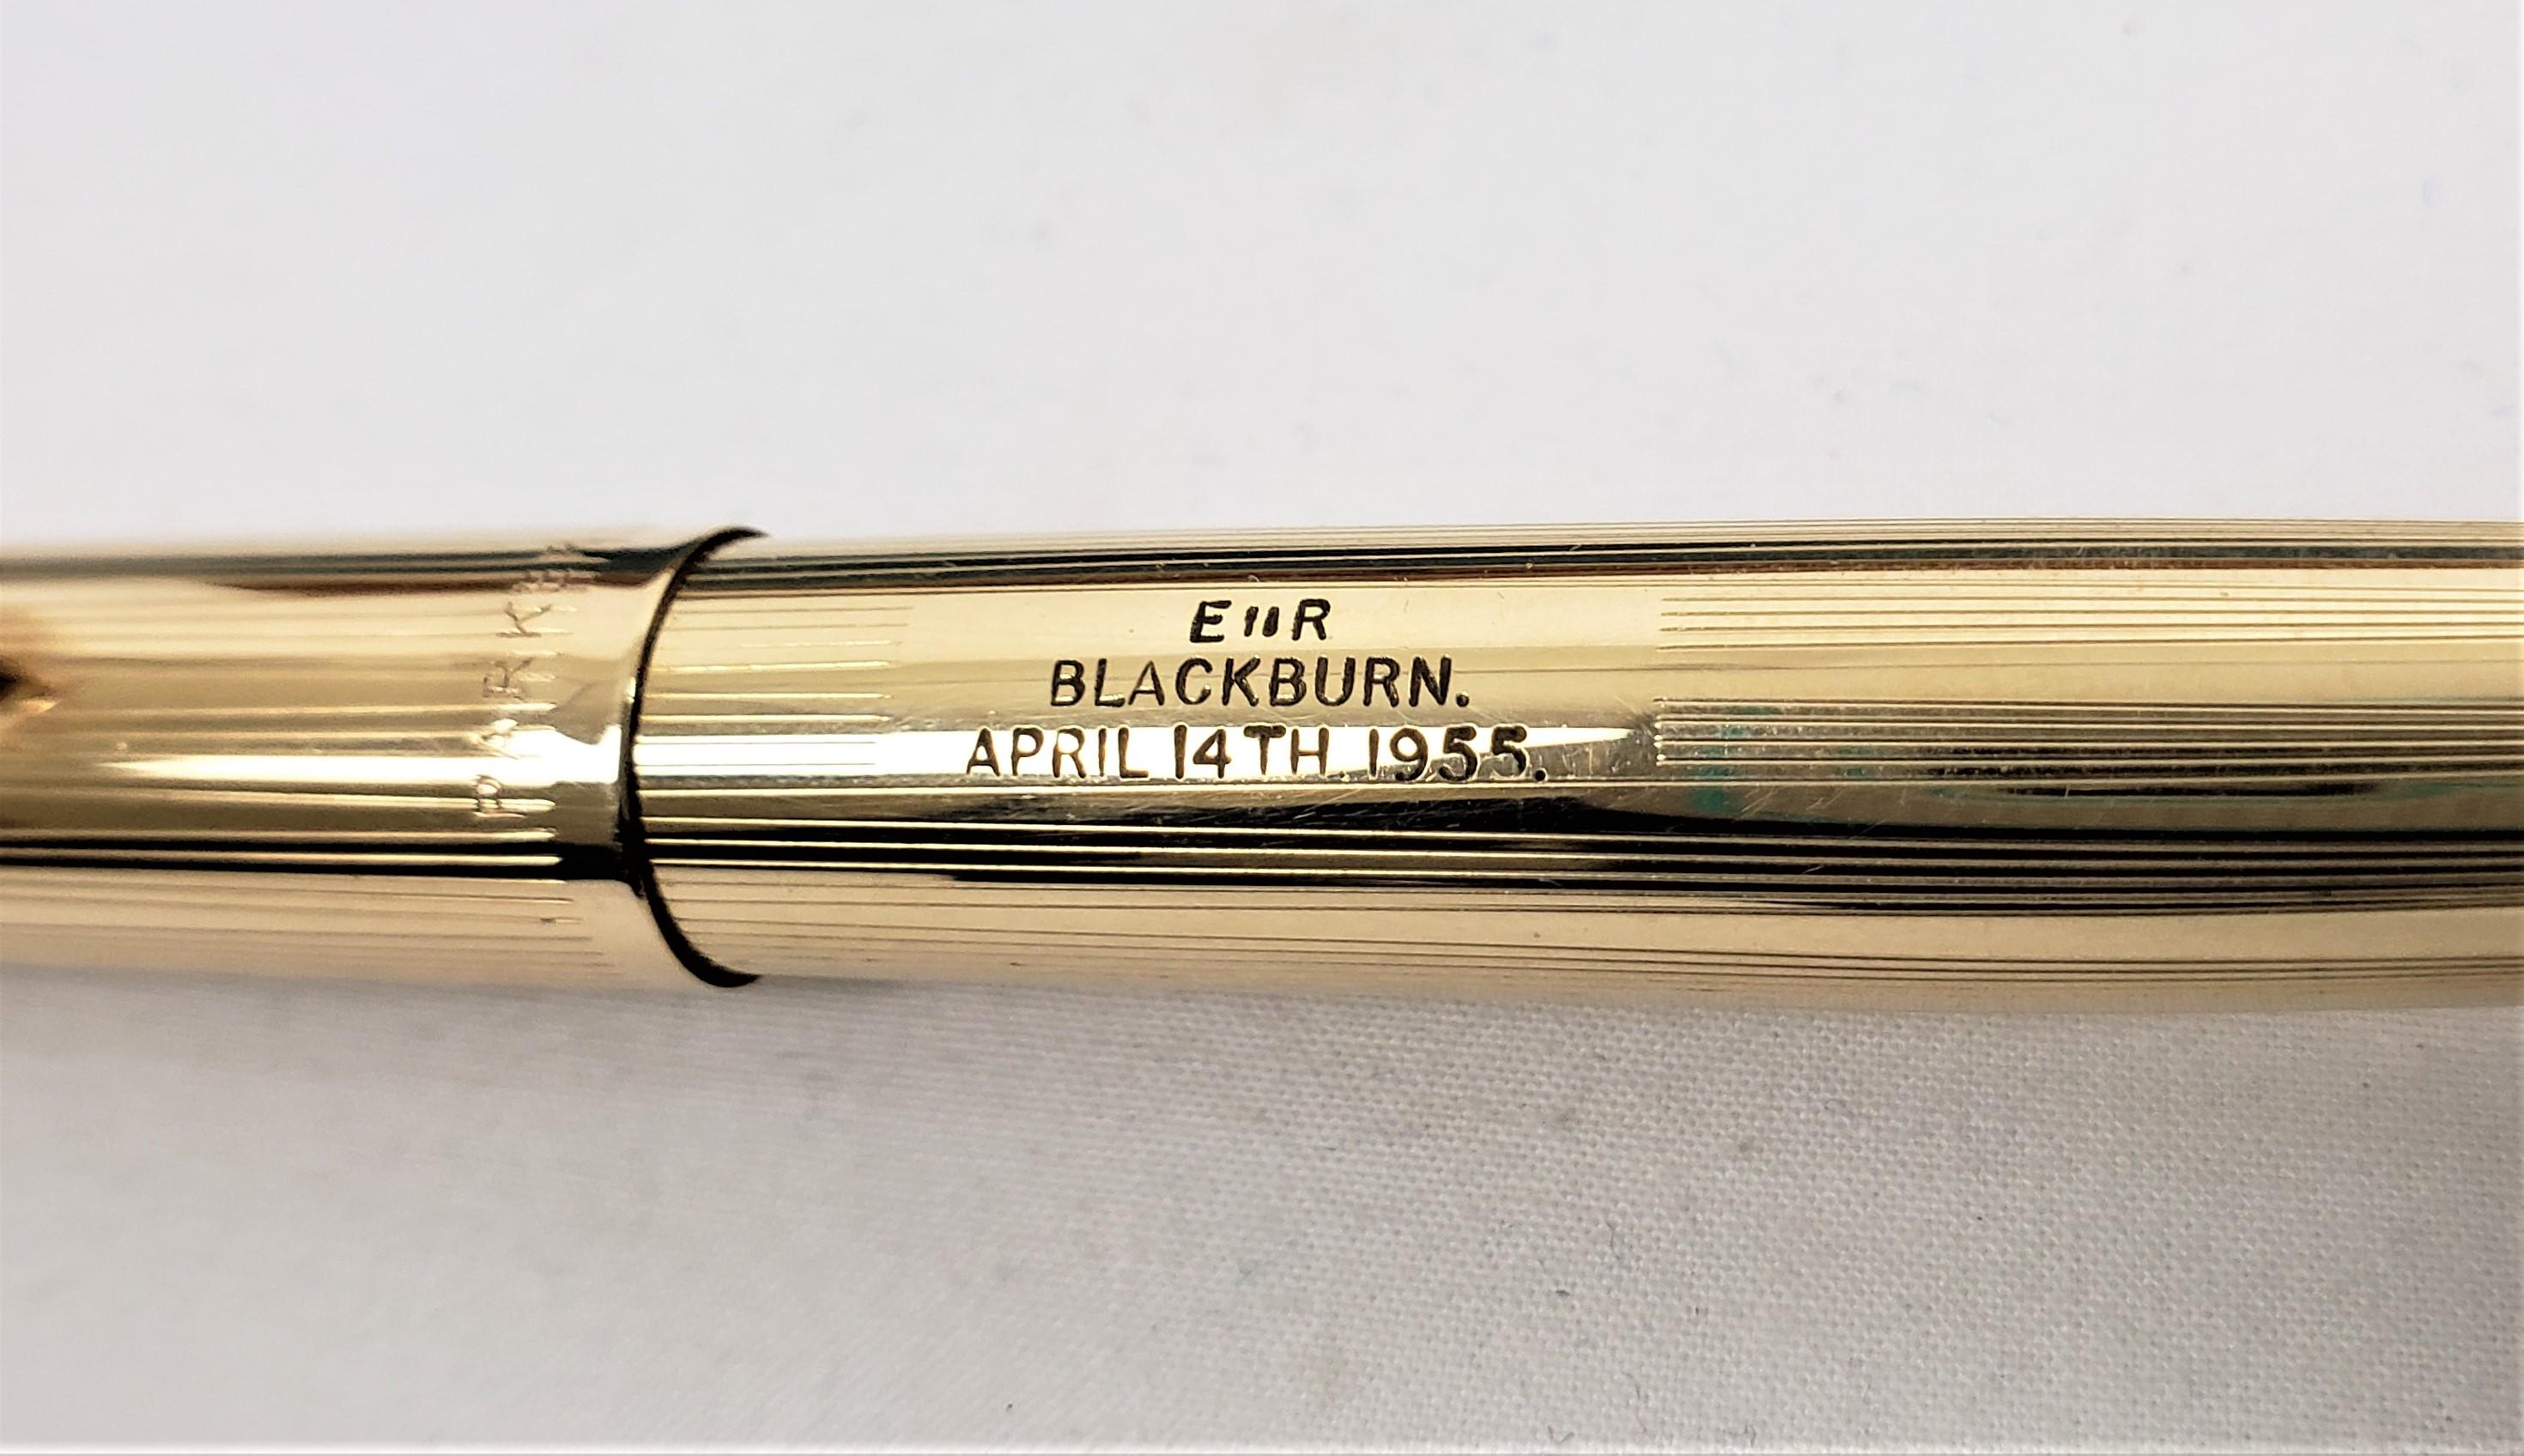 Machine-Made Queen Elizabeth II Used & Presented Parker Gold Filled Pen from Blackburn Visit